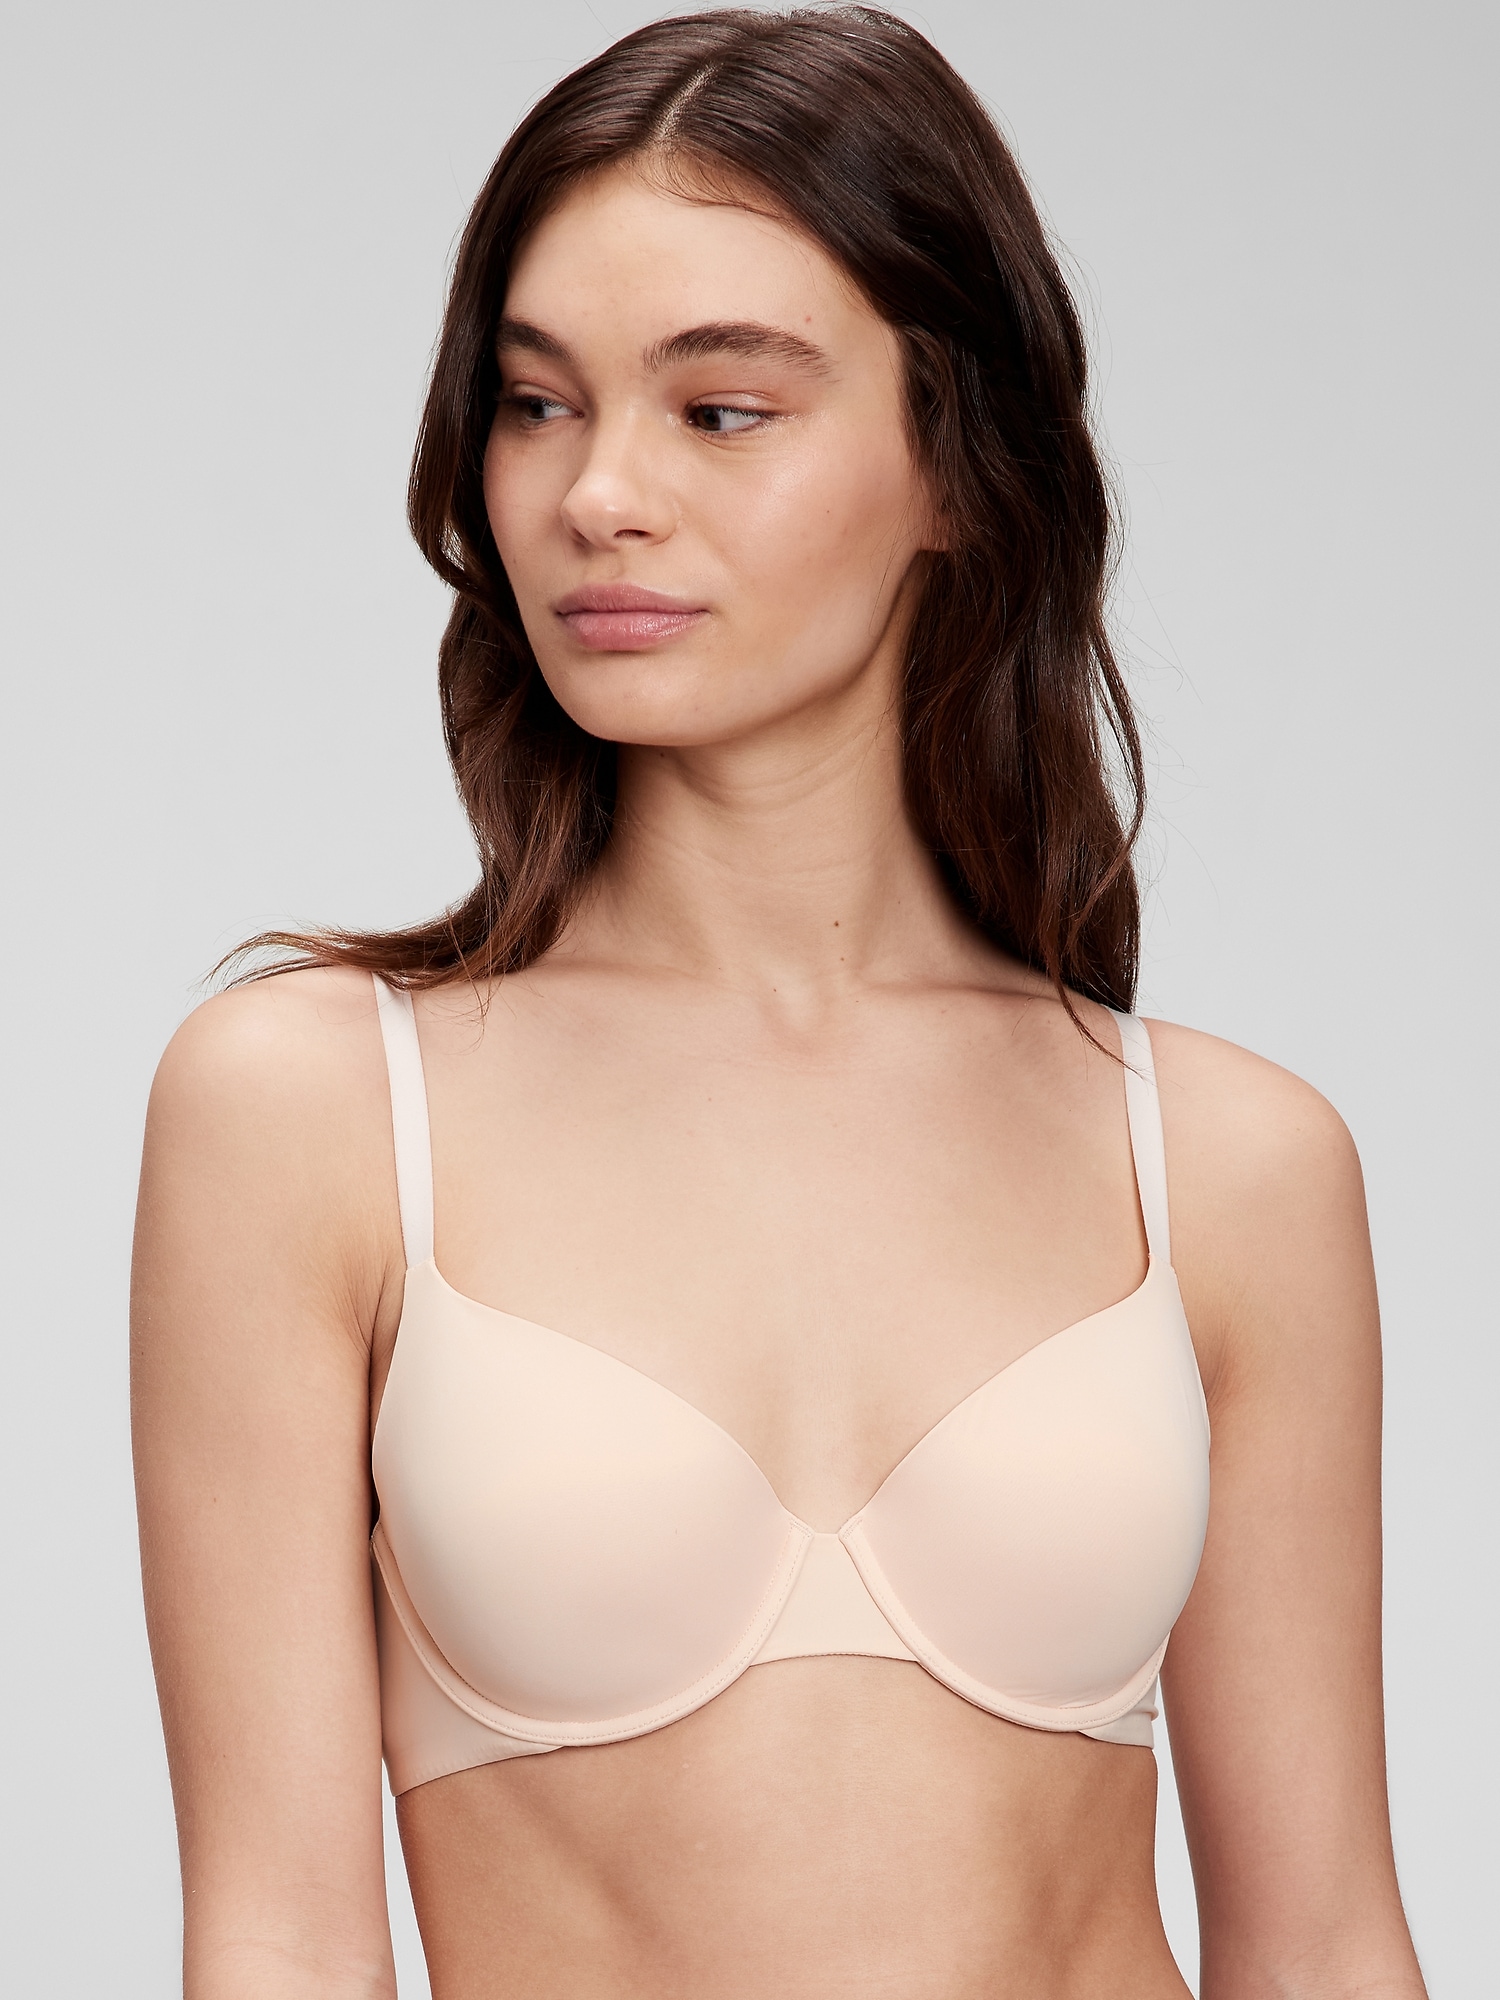 Victoria's Secret VS semi bust bra basic plain lingerie in pink size 34C